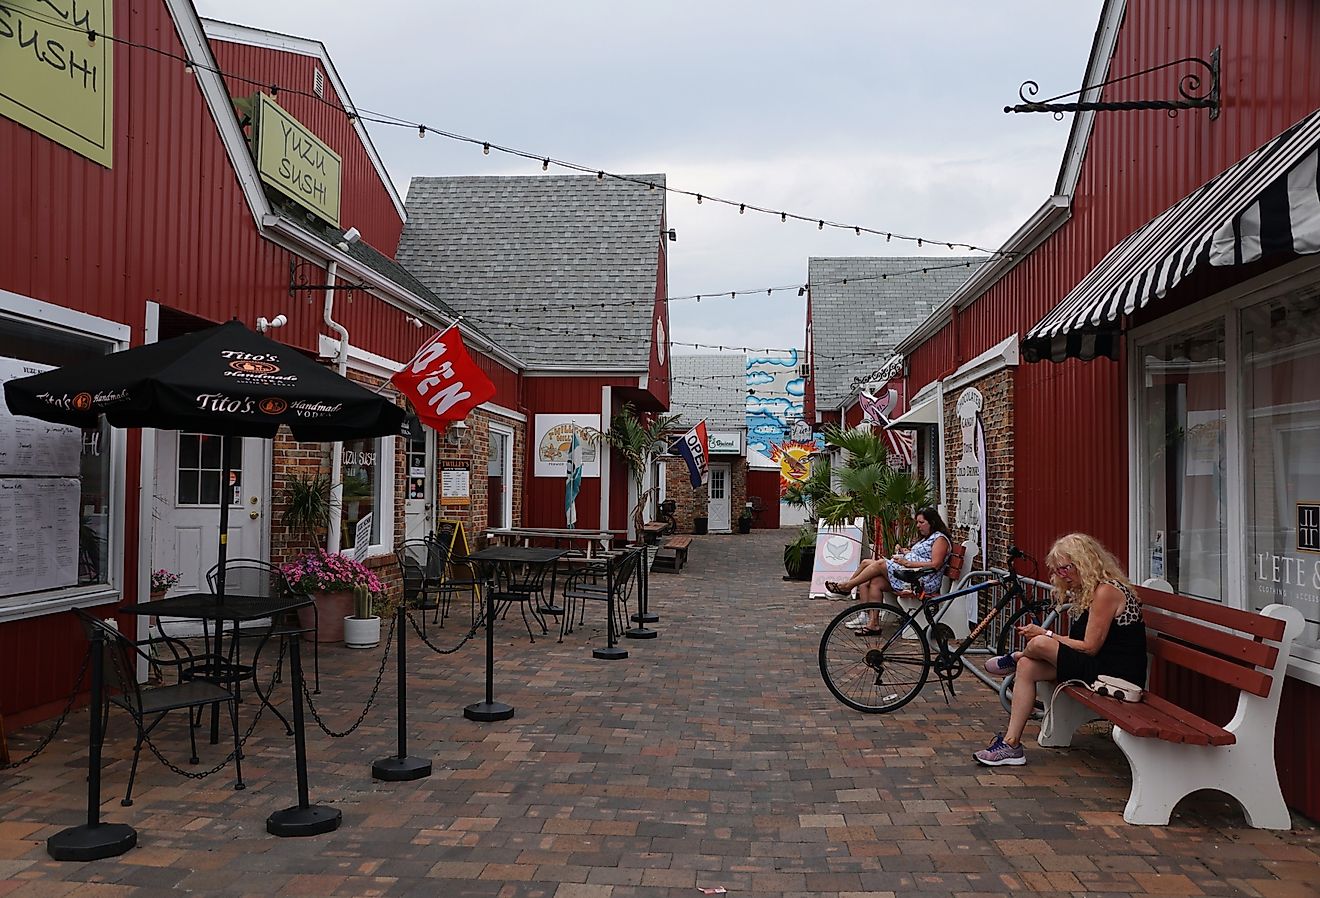 Shops and restaurants around Village of Fenwick, Fenwick Island, Delaware. Image credit Khairil Azhar Junos via Shutterstock